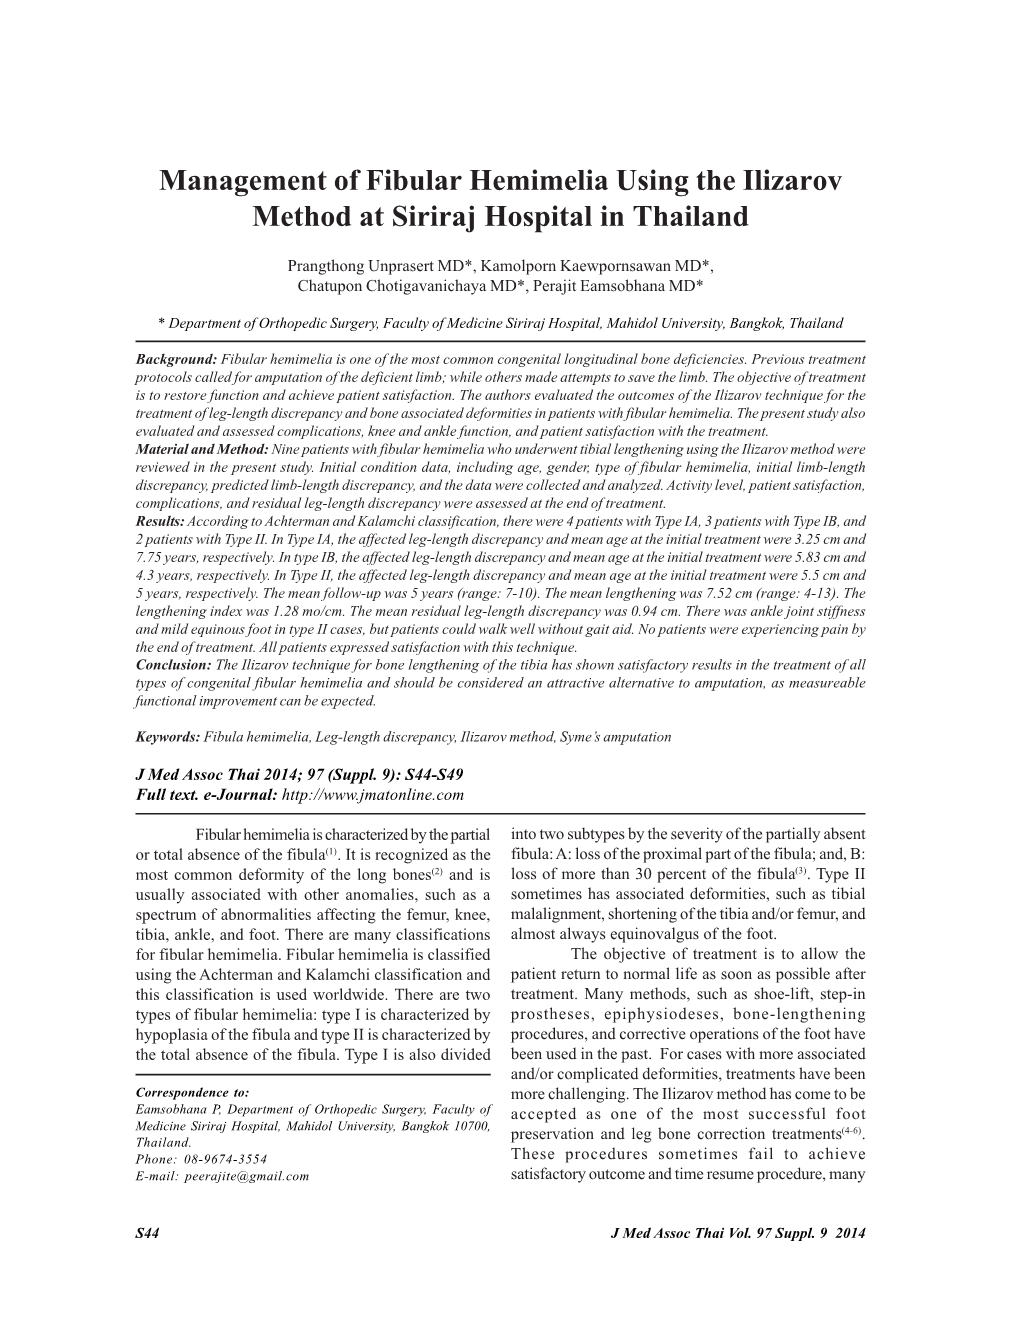 Management of Fibular Hemimelia Using the Ilizarov Method at Siriraj Hospital in Thailand